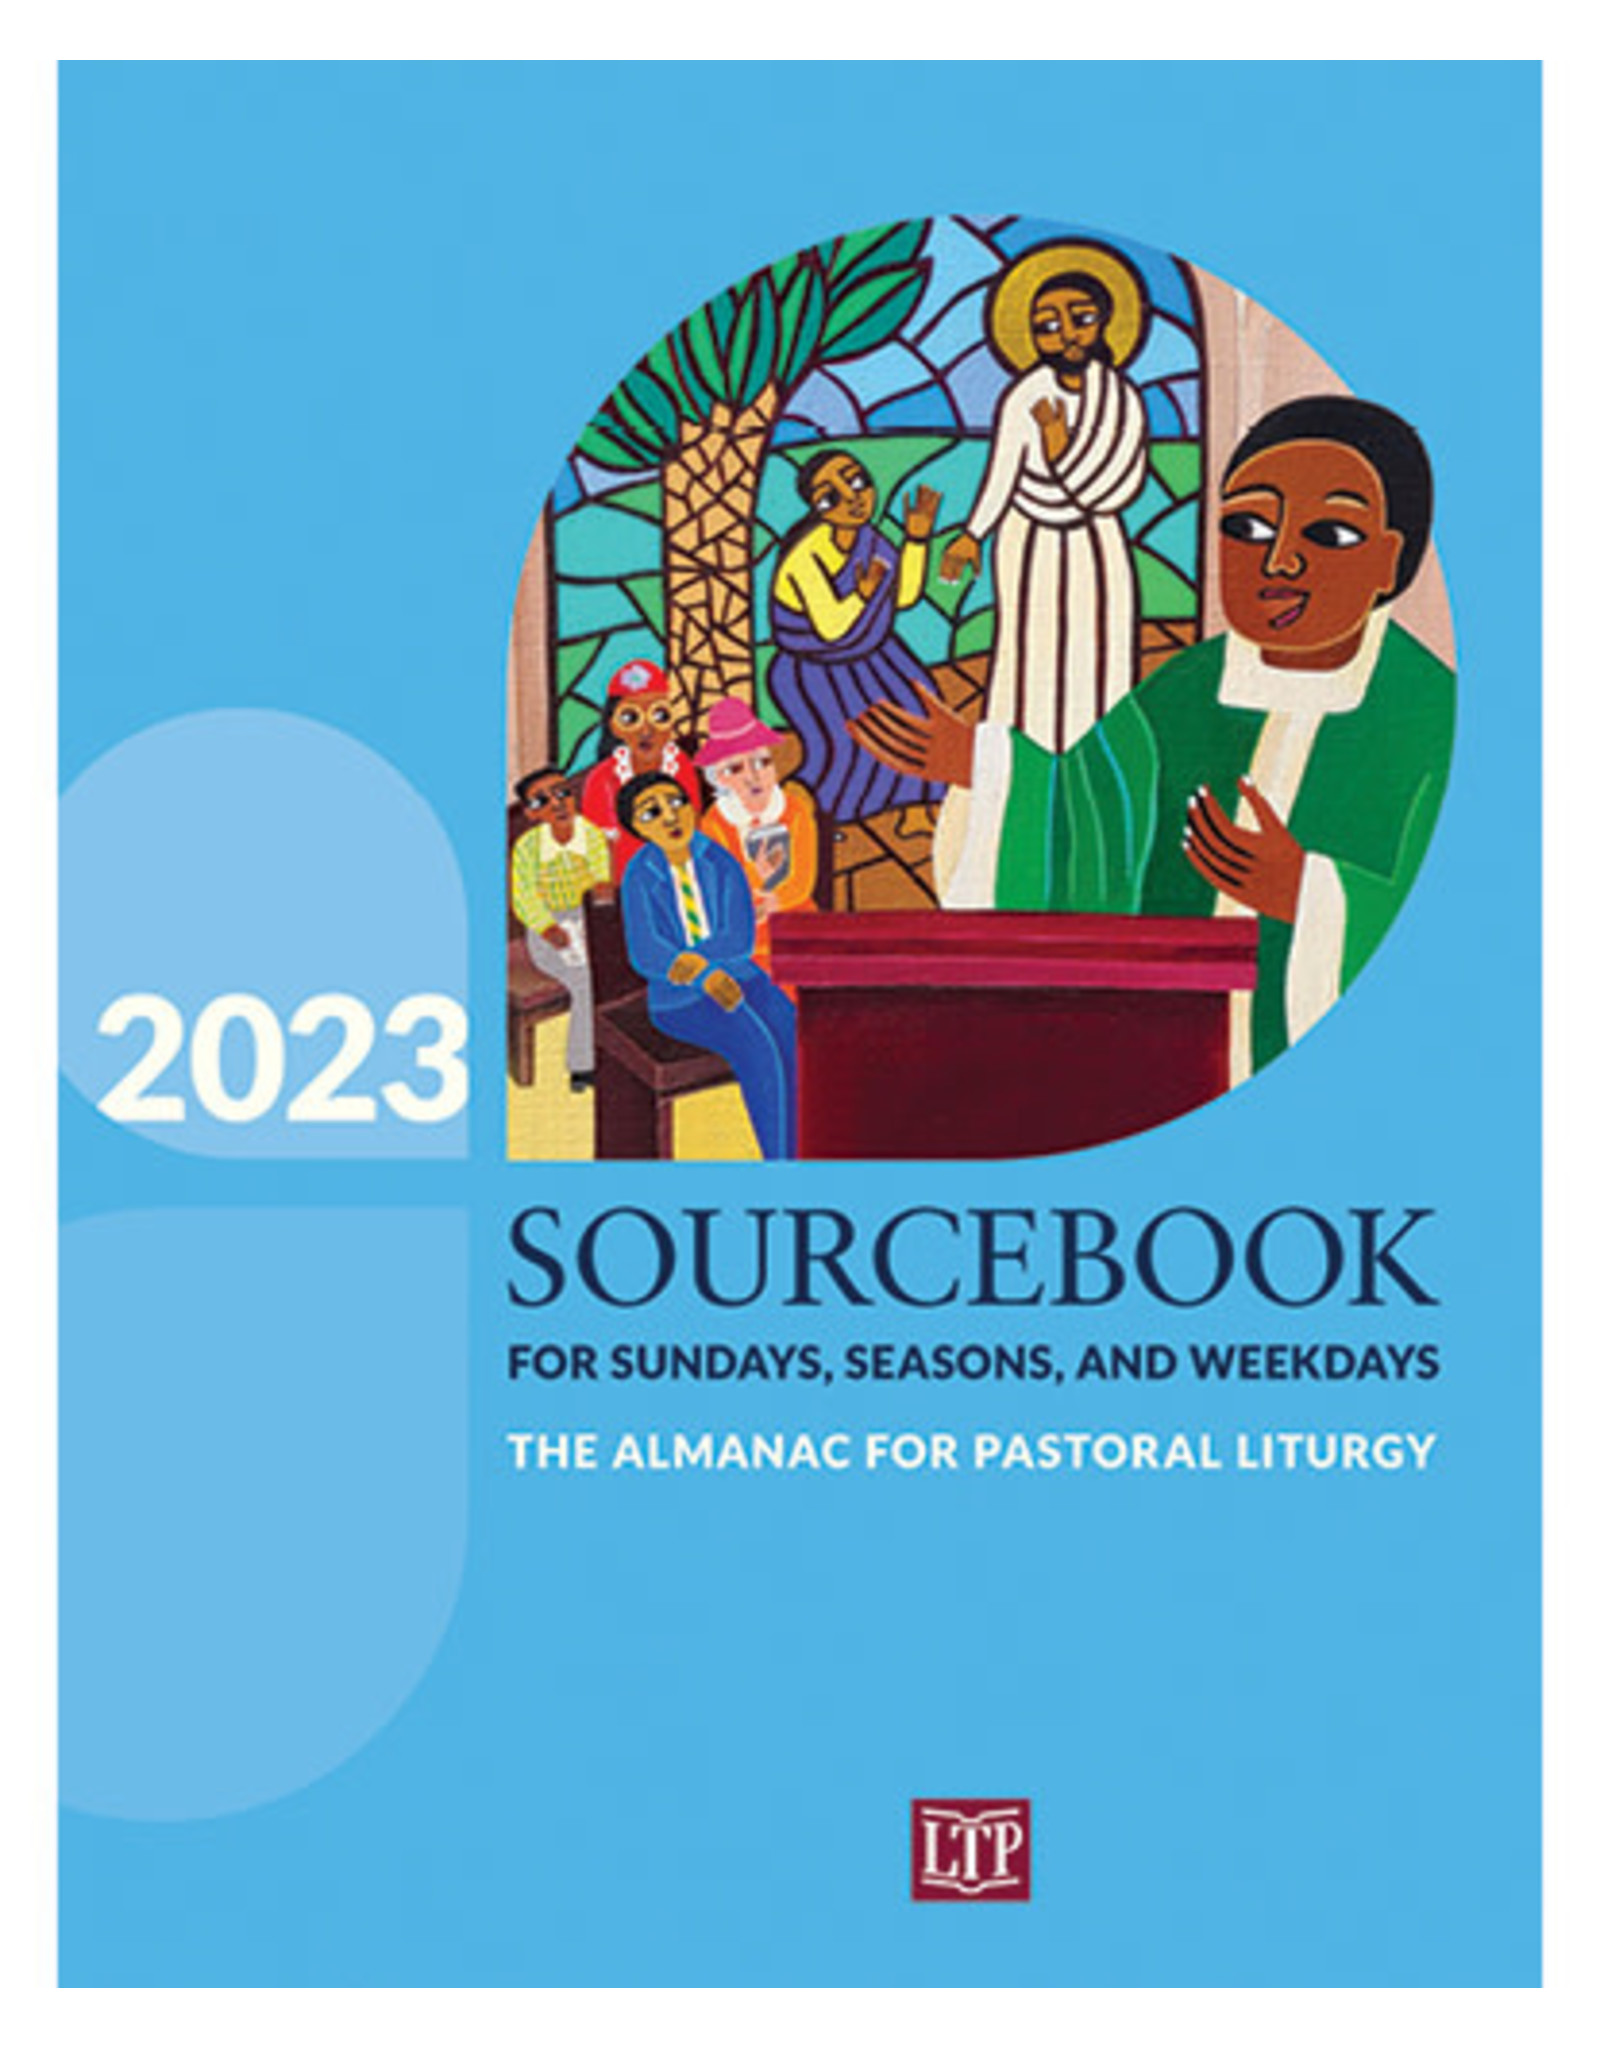 LTP (Liturgy Training Publications) 2023 Sourcebook for Sundays, Seasons, & Weekdays